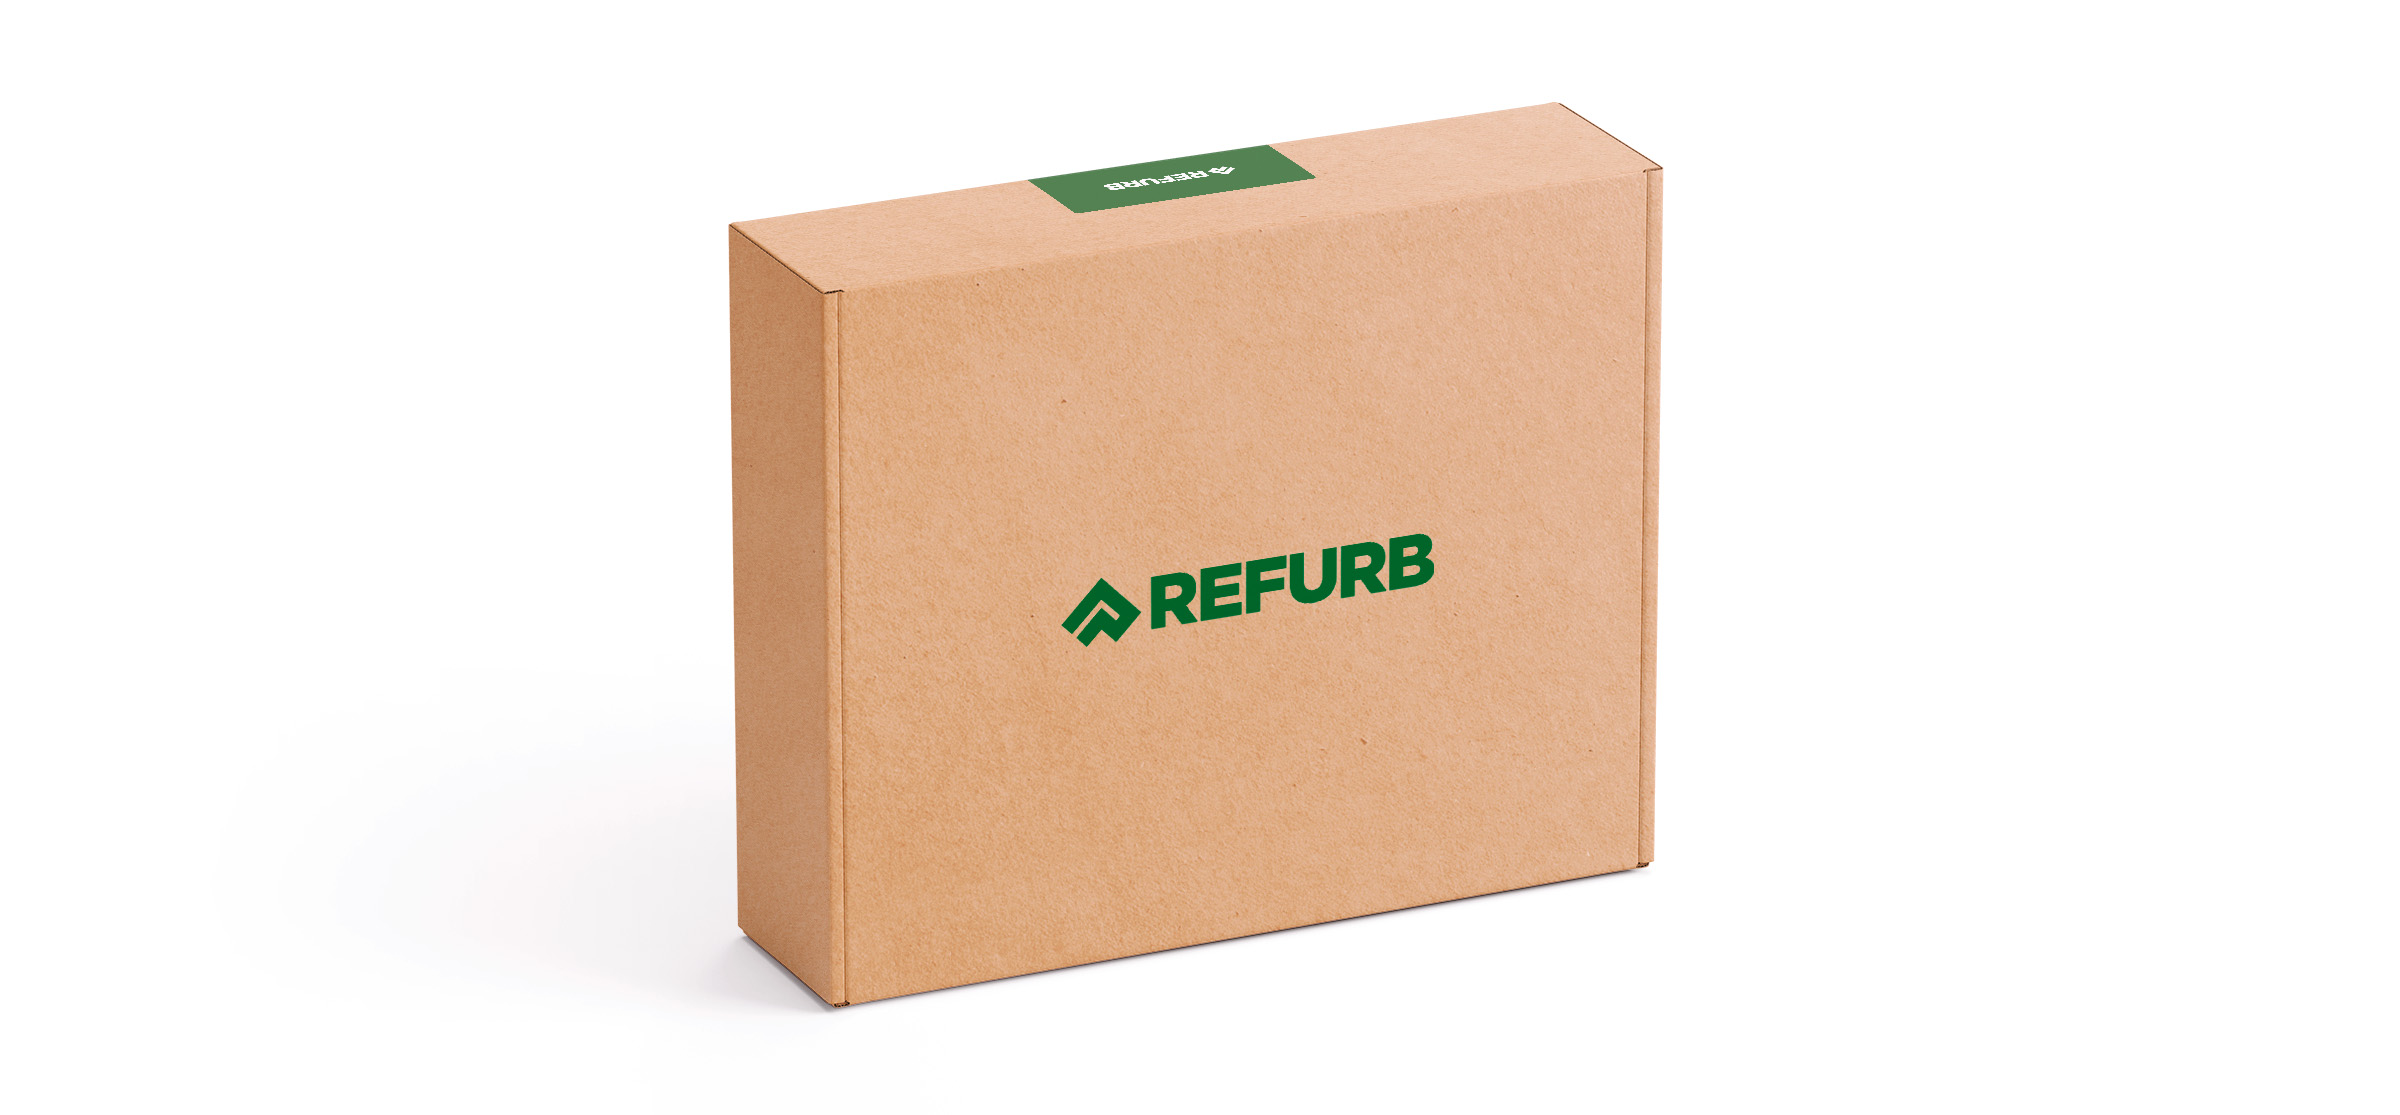 Refurb_Box